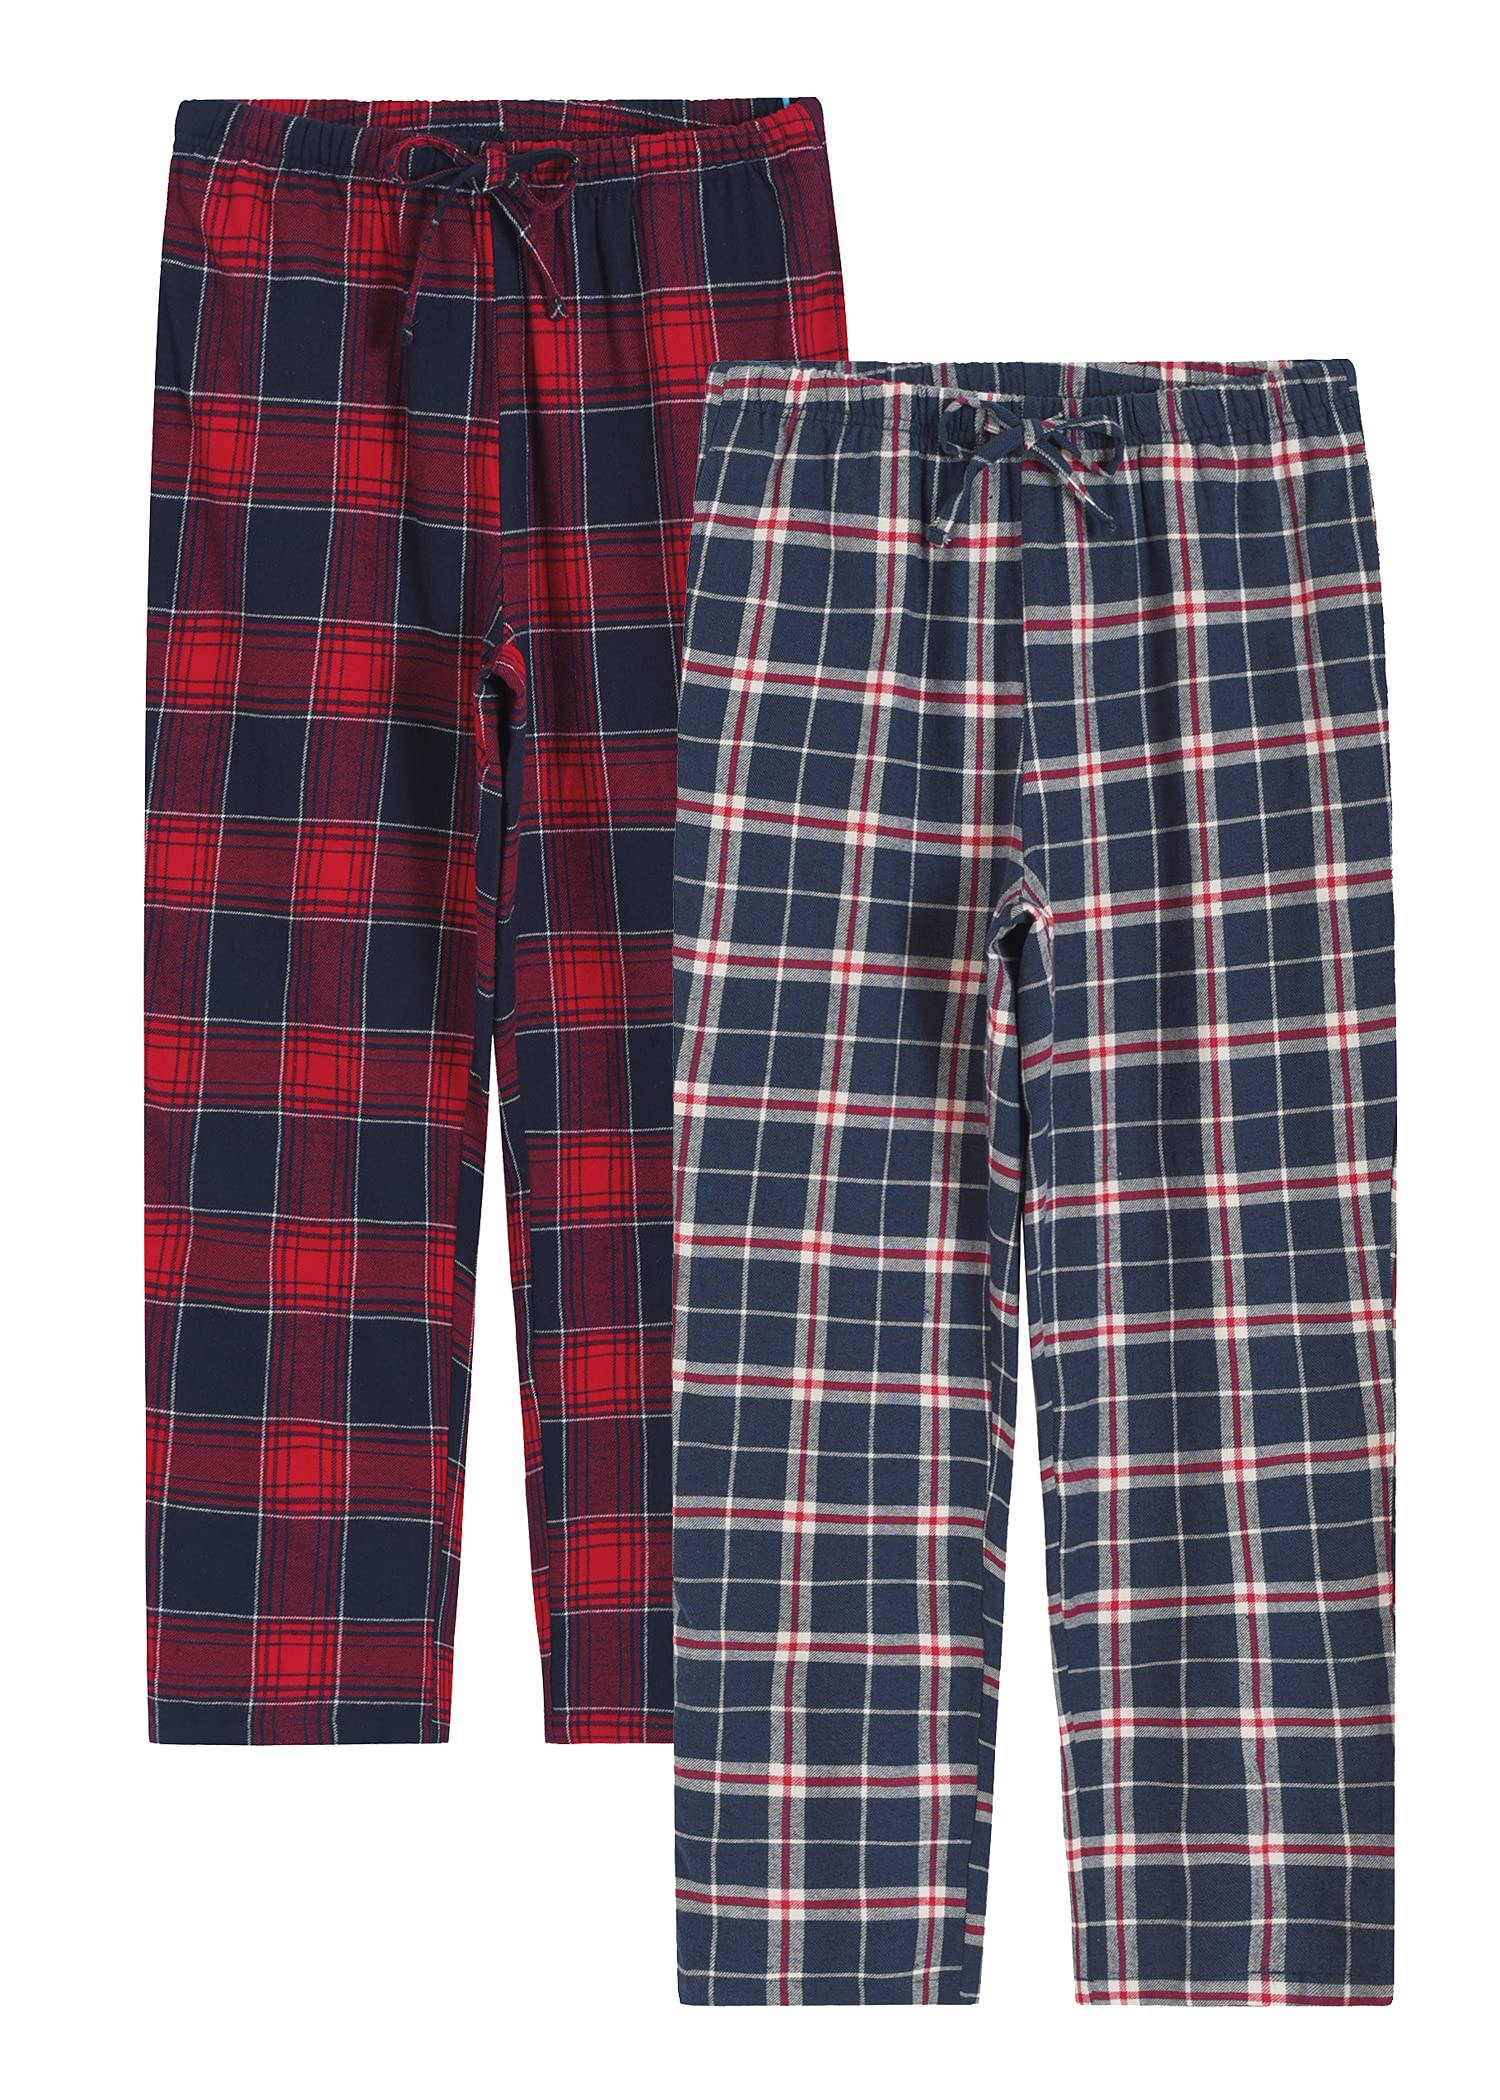 Women's Cotton Flannel Pajama Pants Plaid Pj Bottoms with Pockets